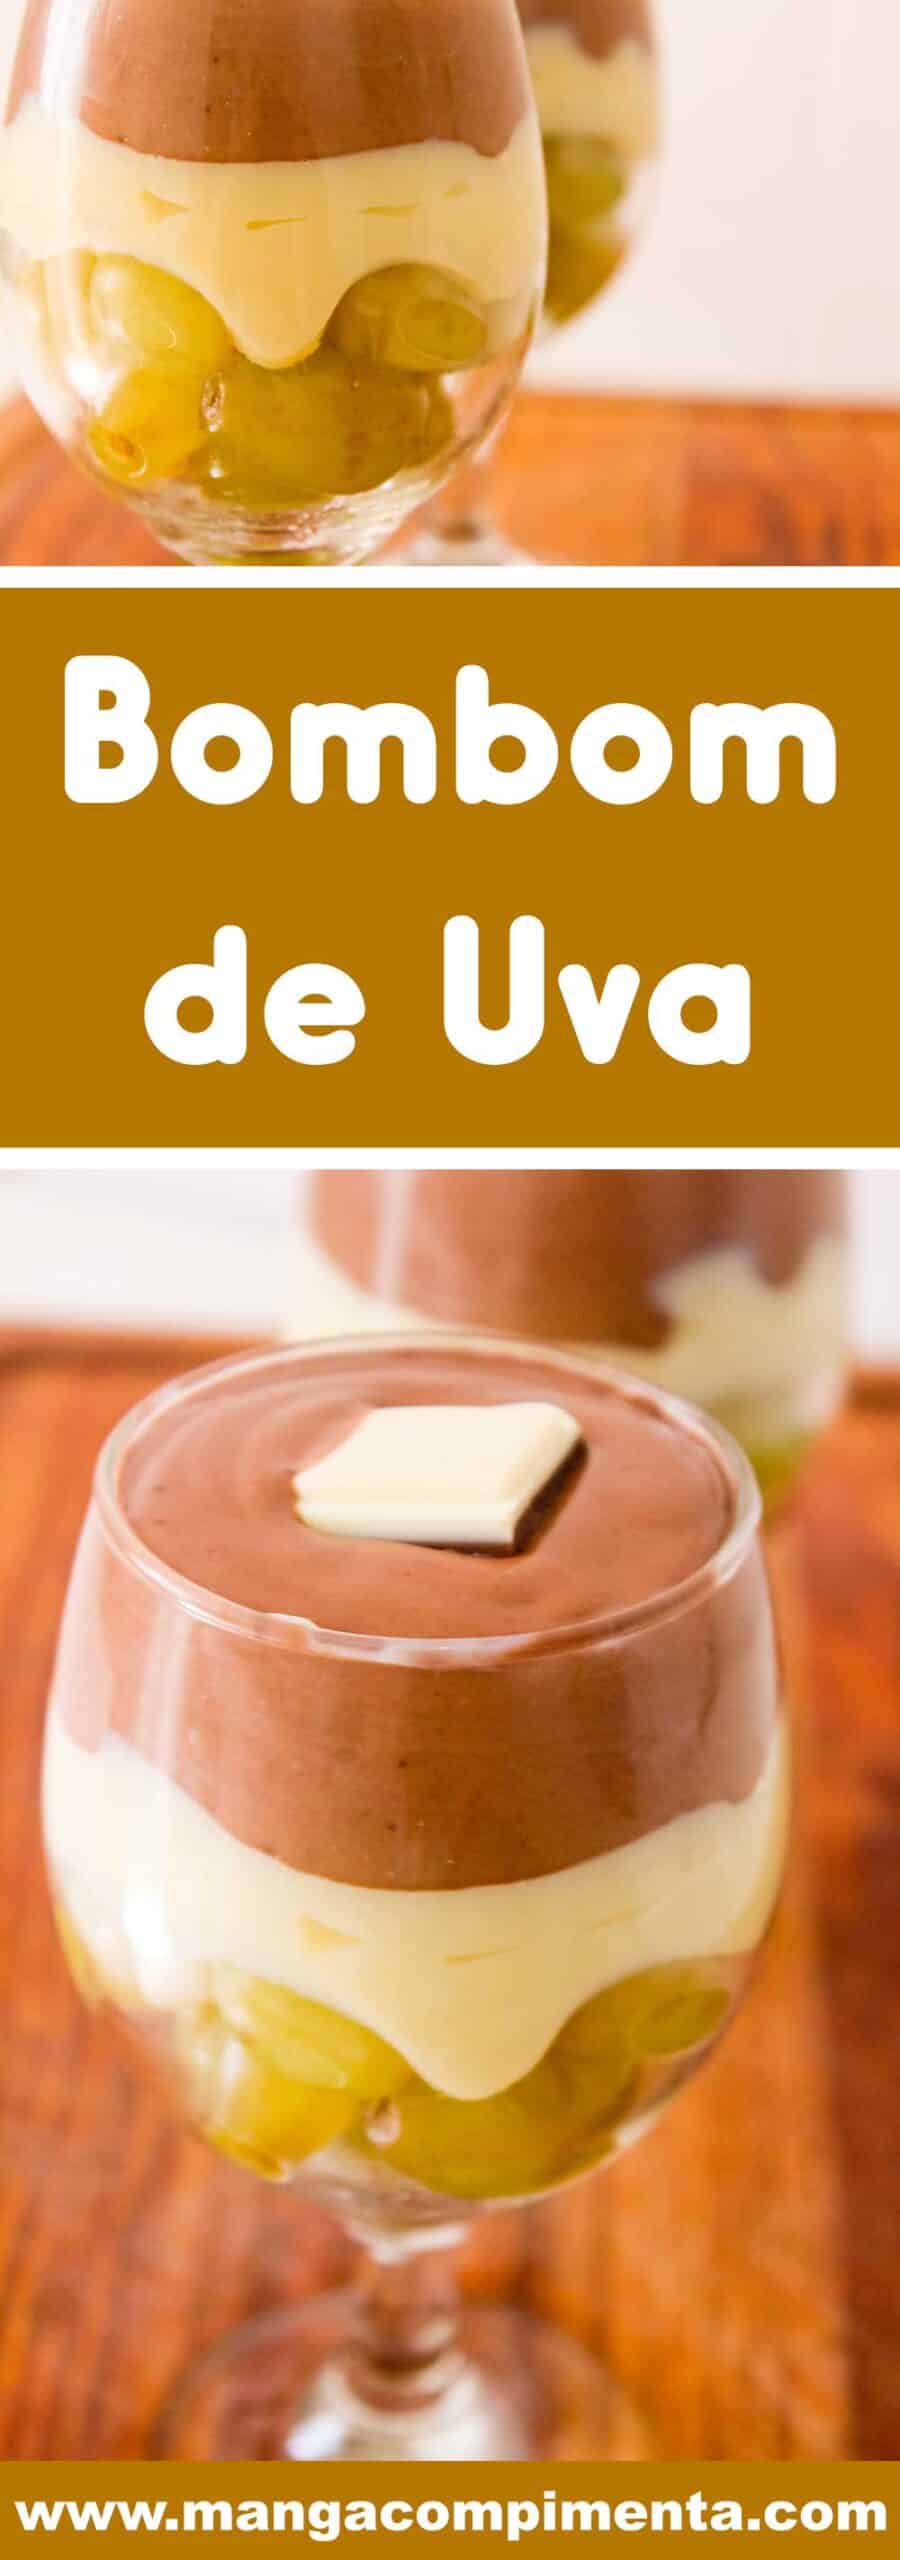 Receita de Bombom de Uva - prepare essa sobremesa deliciosa para as festas de final de ano! 